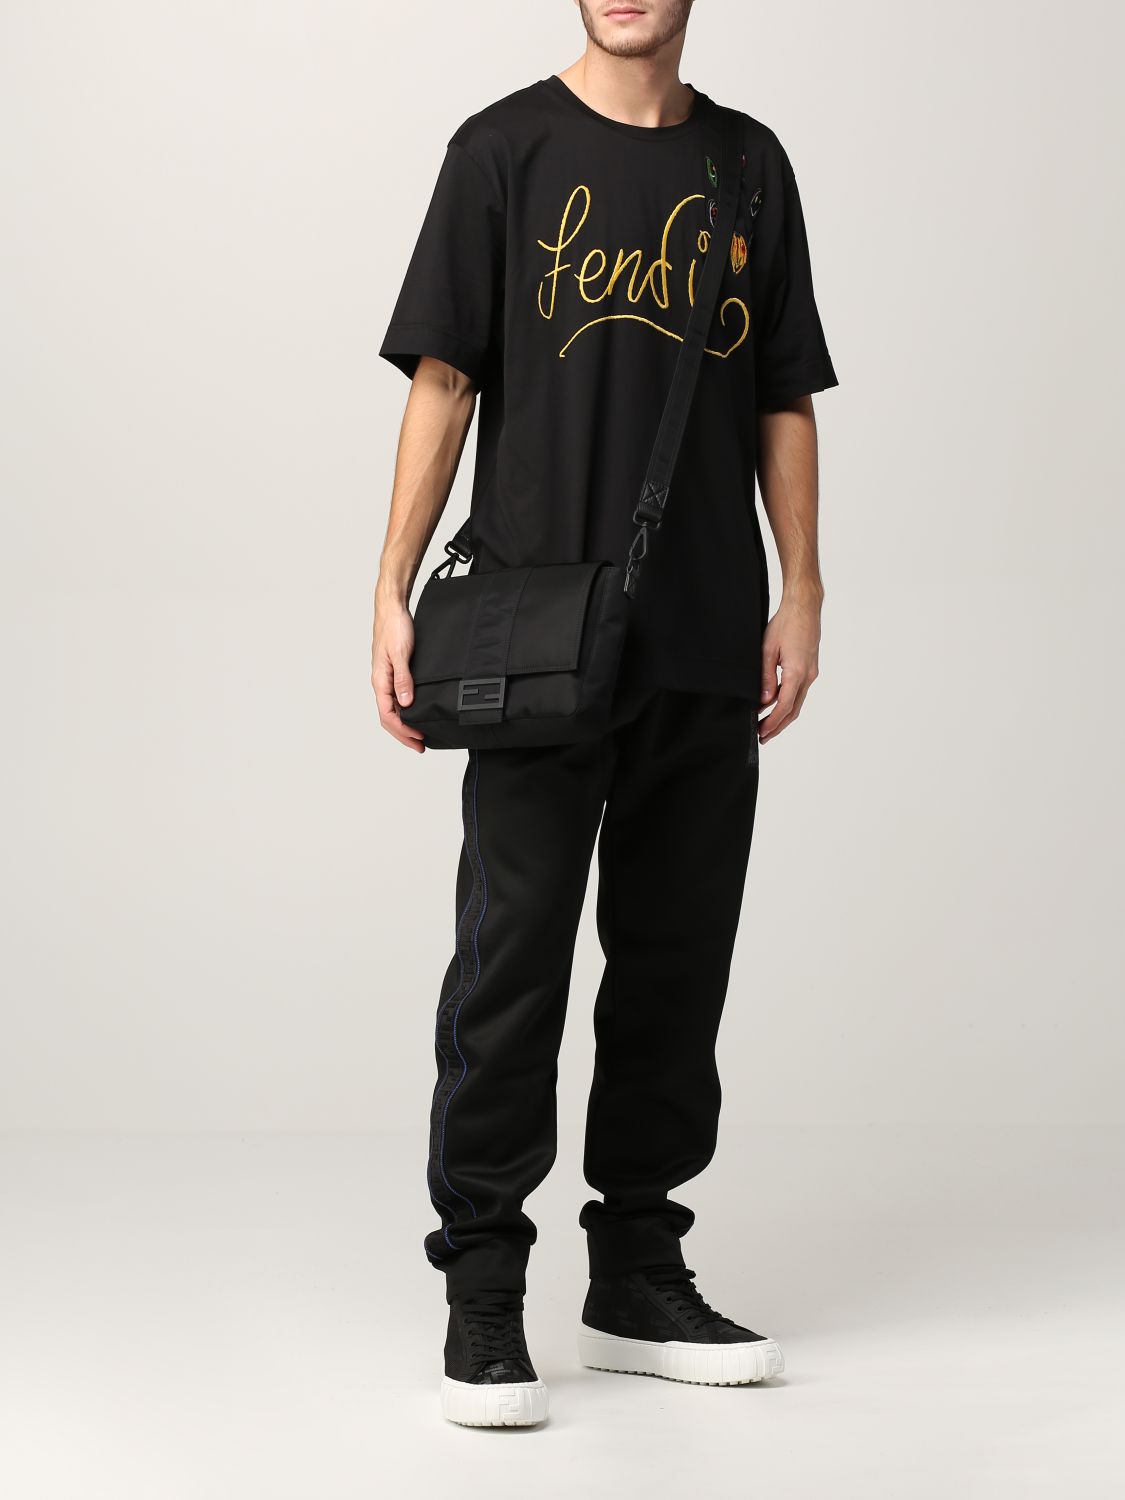 FENDI: T-shirt men T-Shirt Fendi Men Black T-Shirt FY0936 AH13 GIGLIO.COM